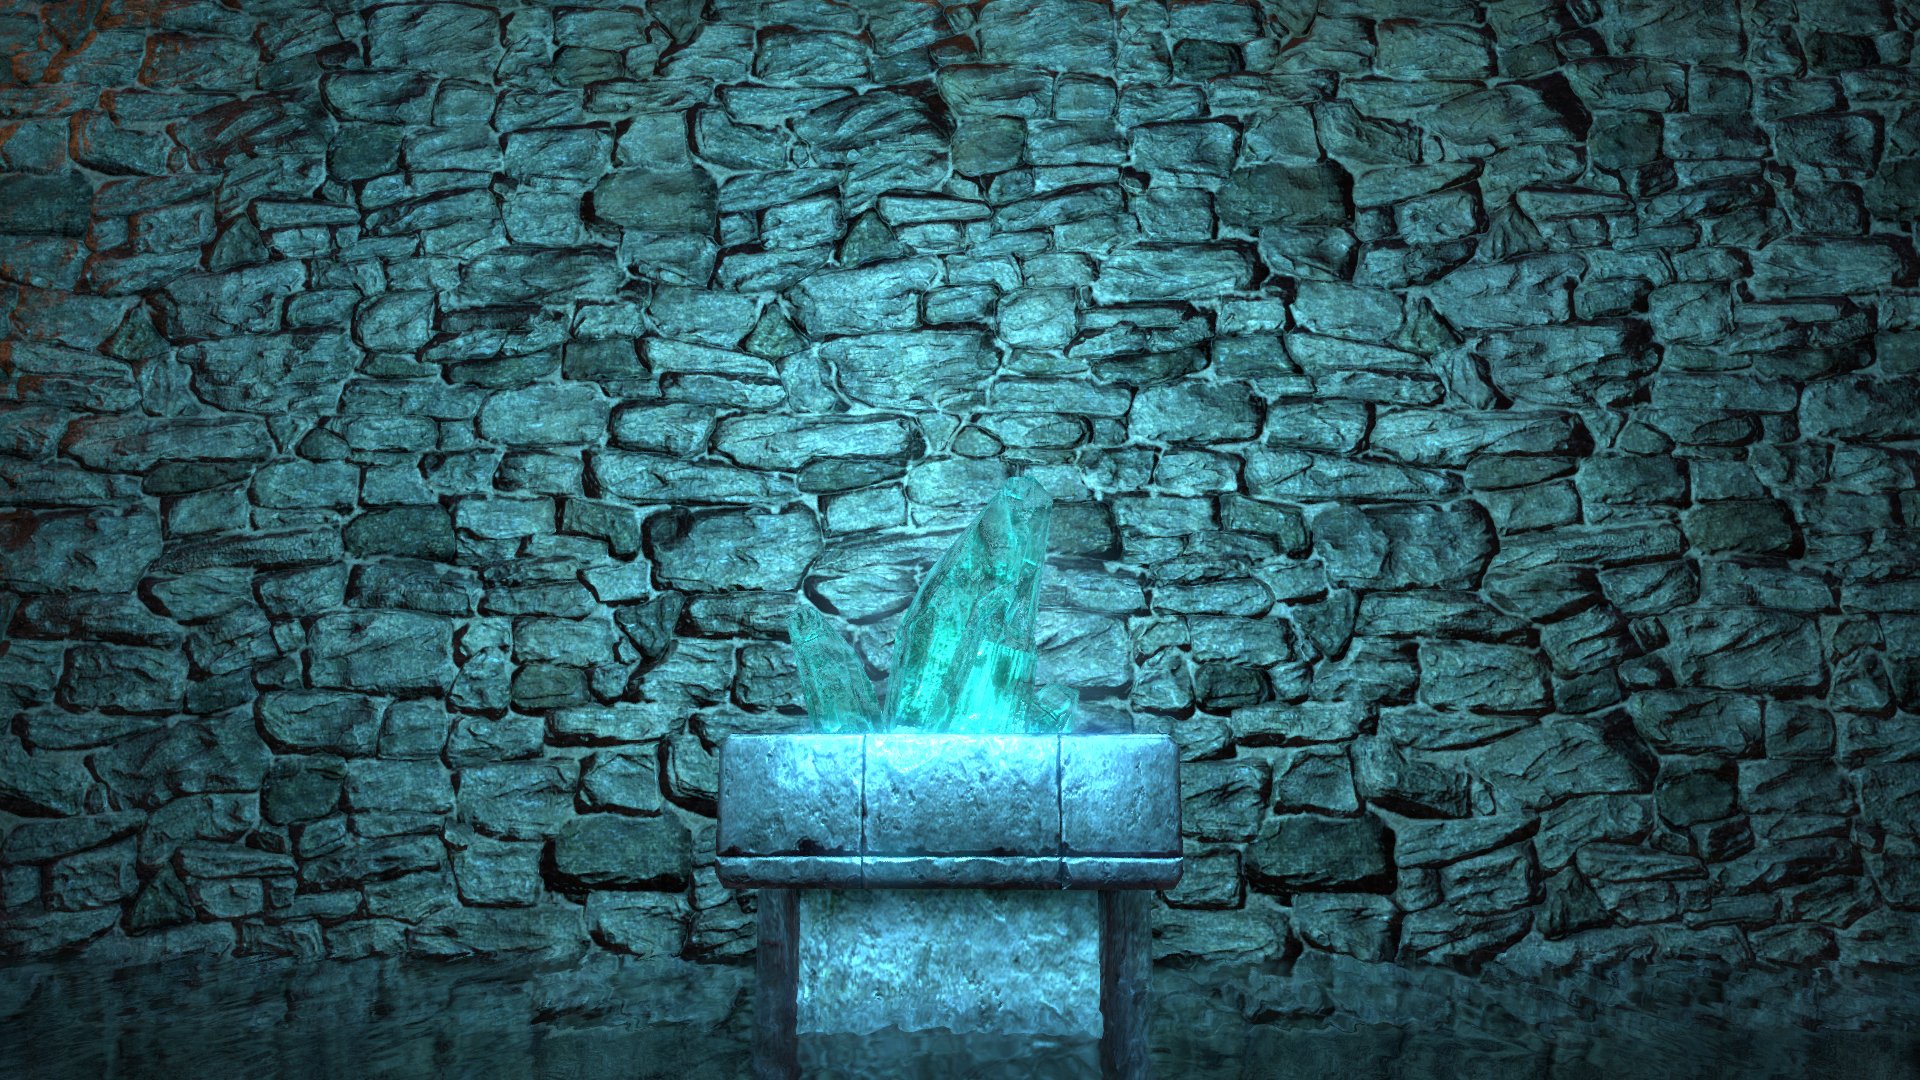 Shadowy Stone Wall And Glowing Crystal In Pool Of Water - Calming Desktop - HD Wallpaper 